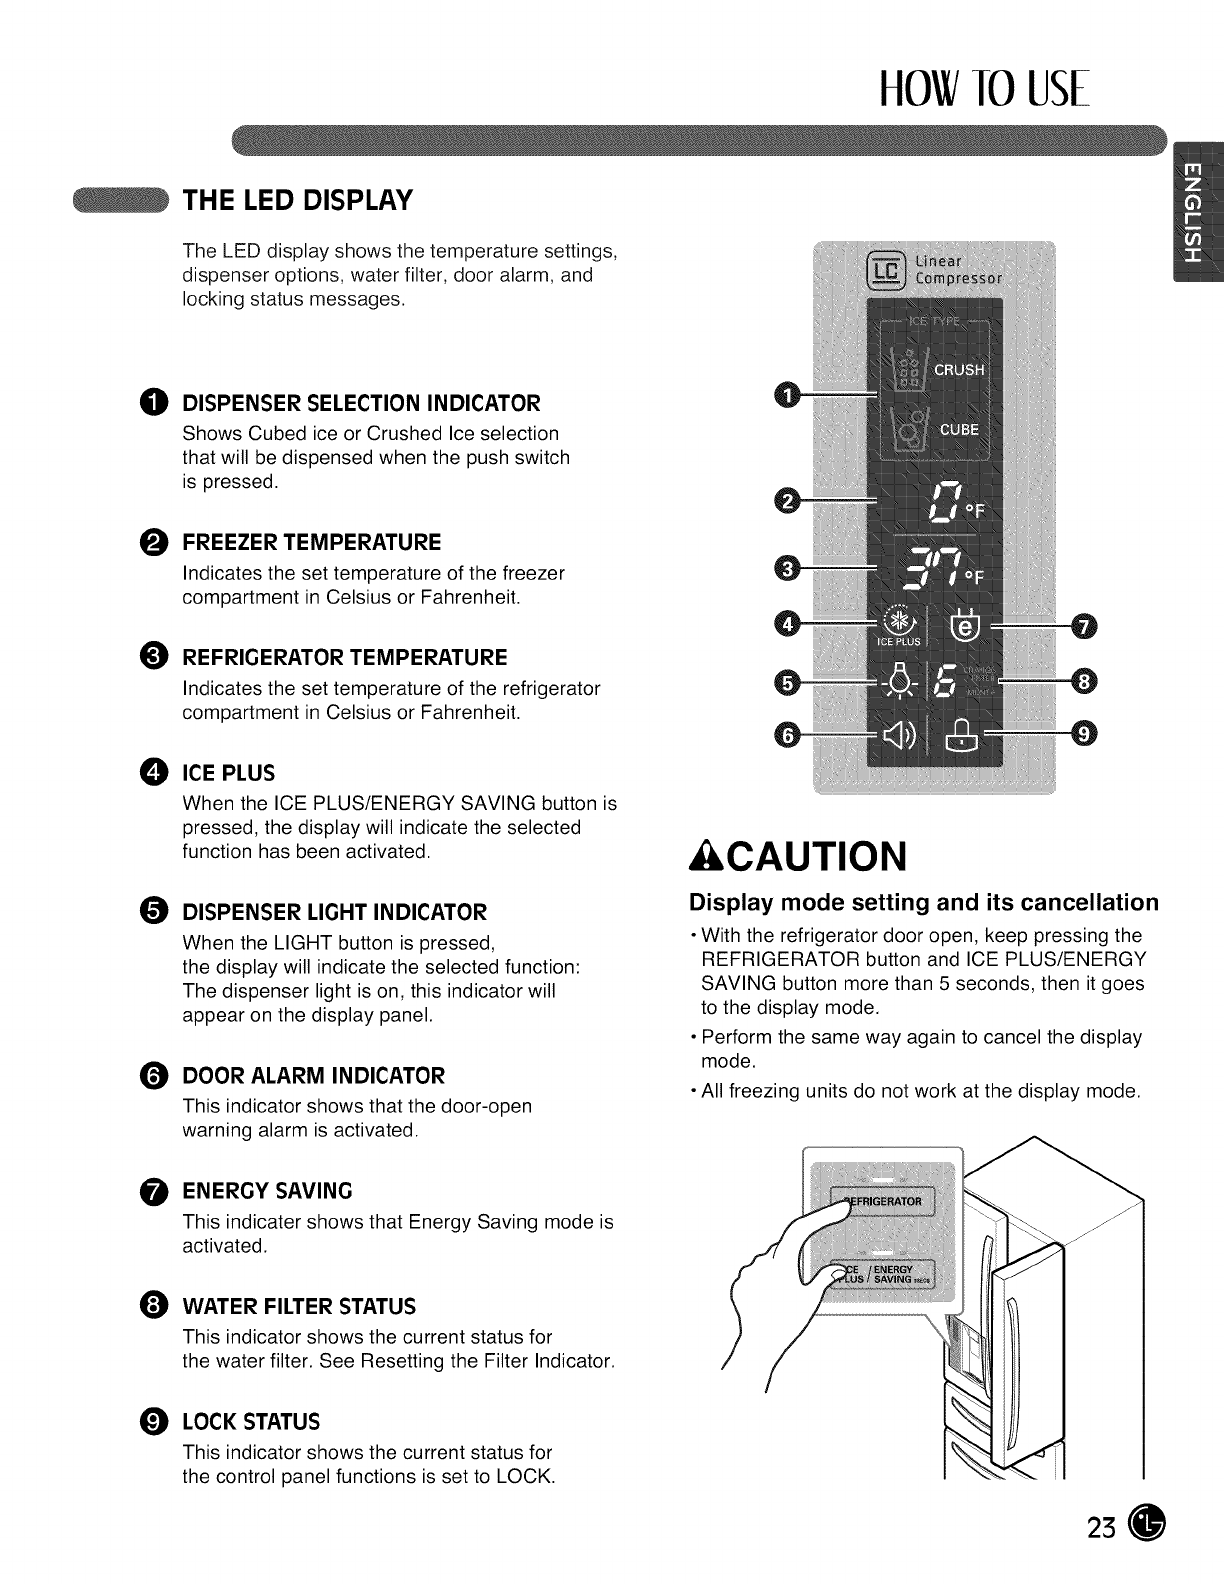 frigidaire refrigerator control panel reset